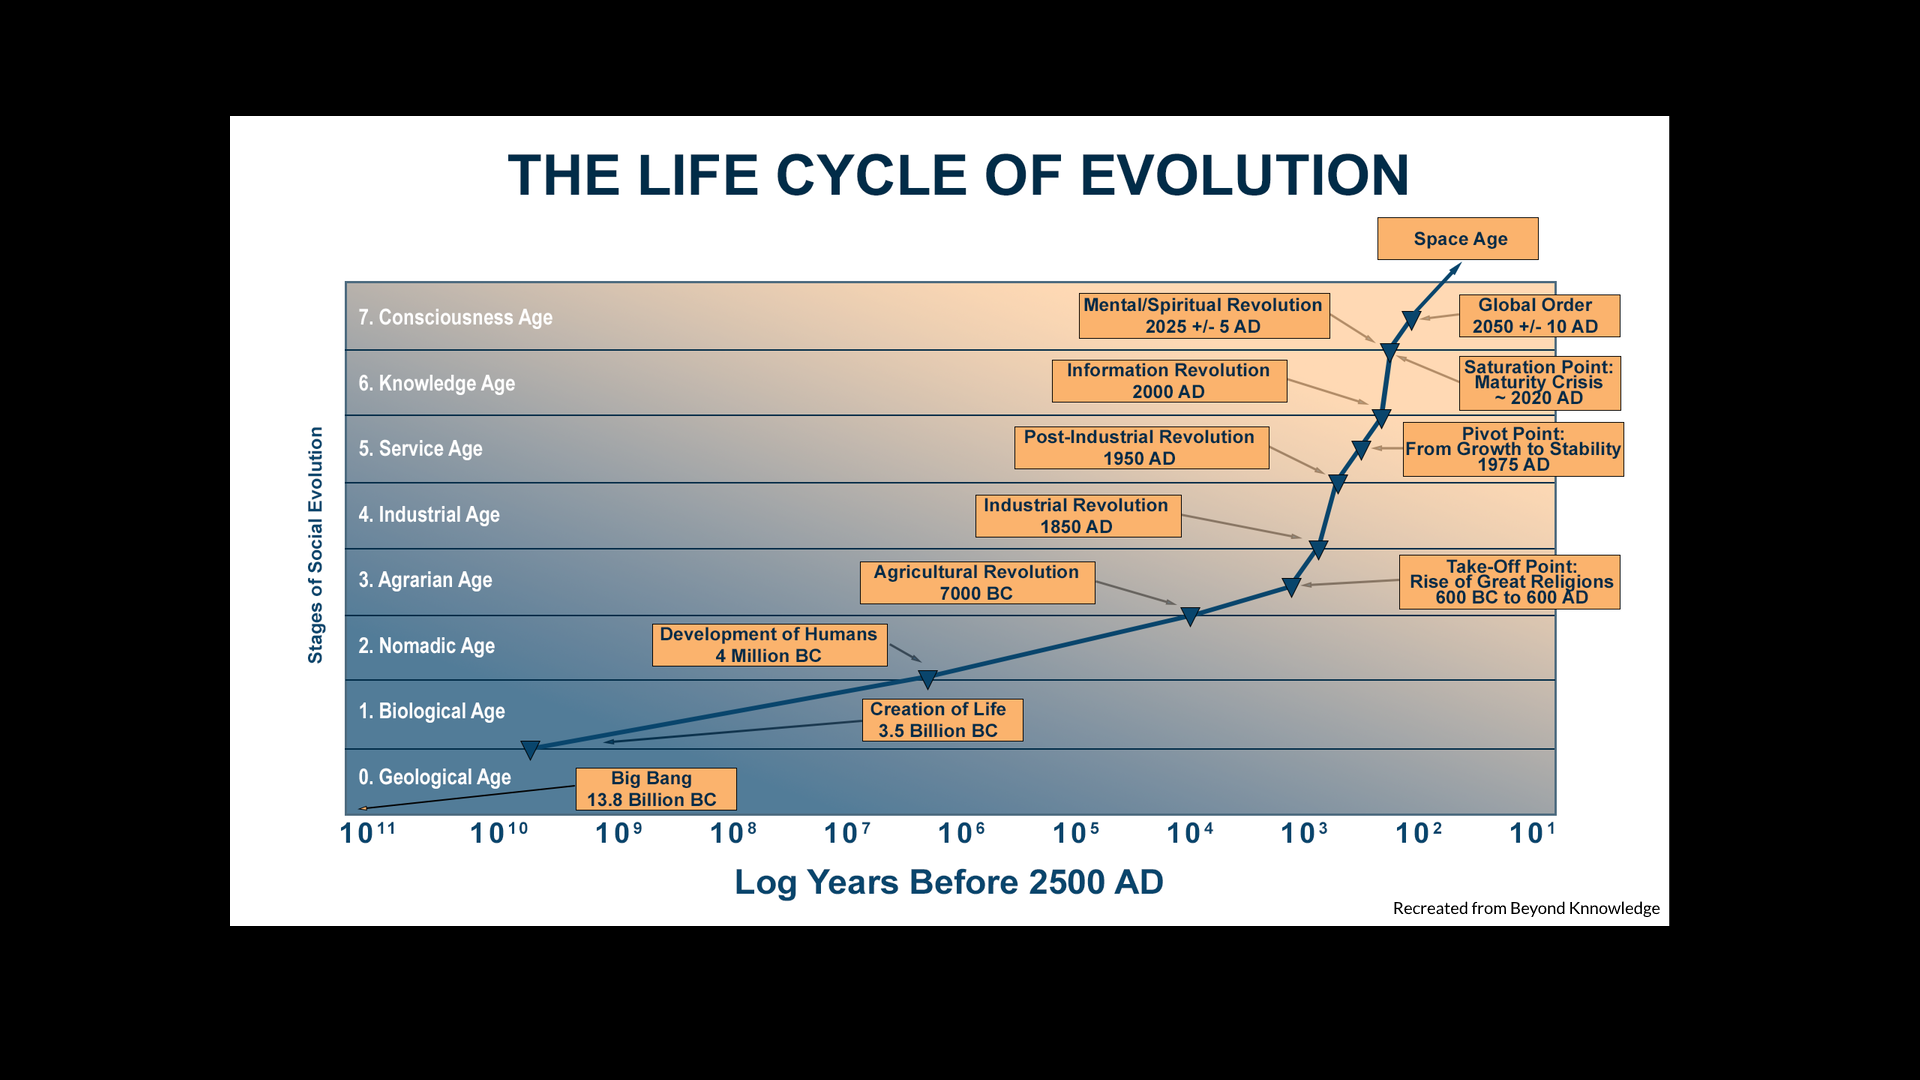 An image describing the lifecycle of evolution